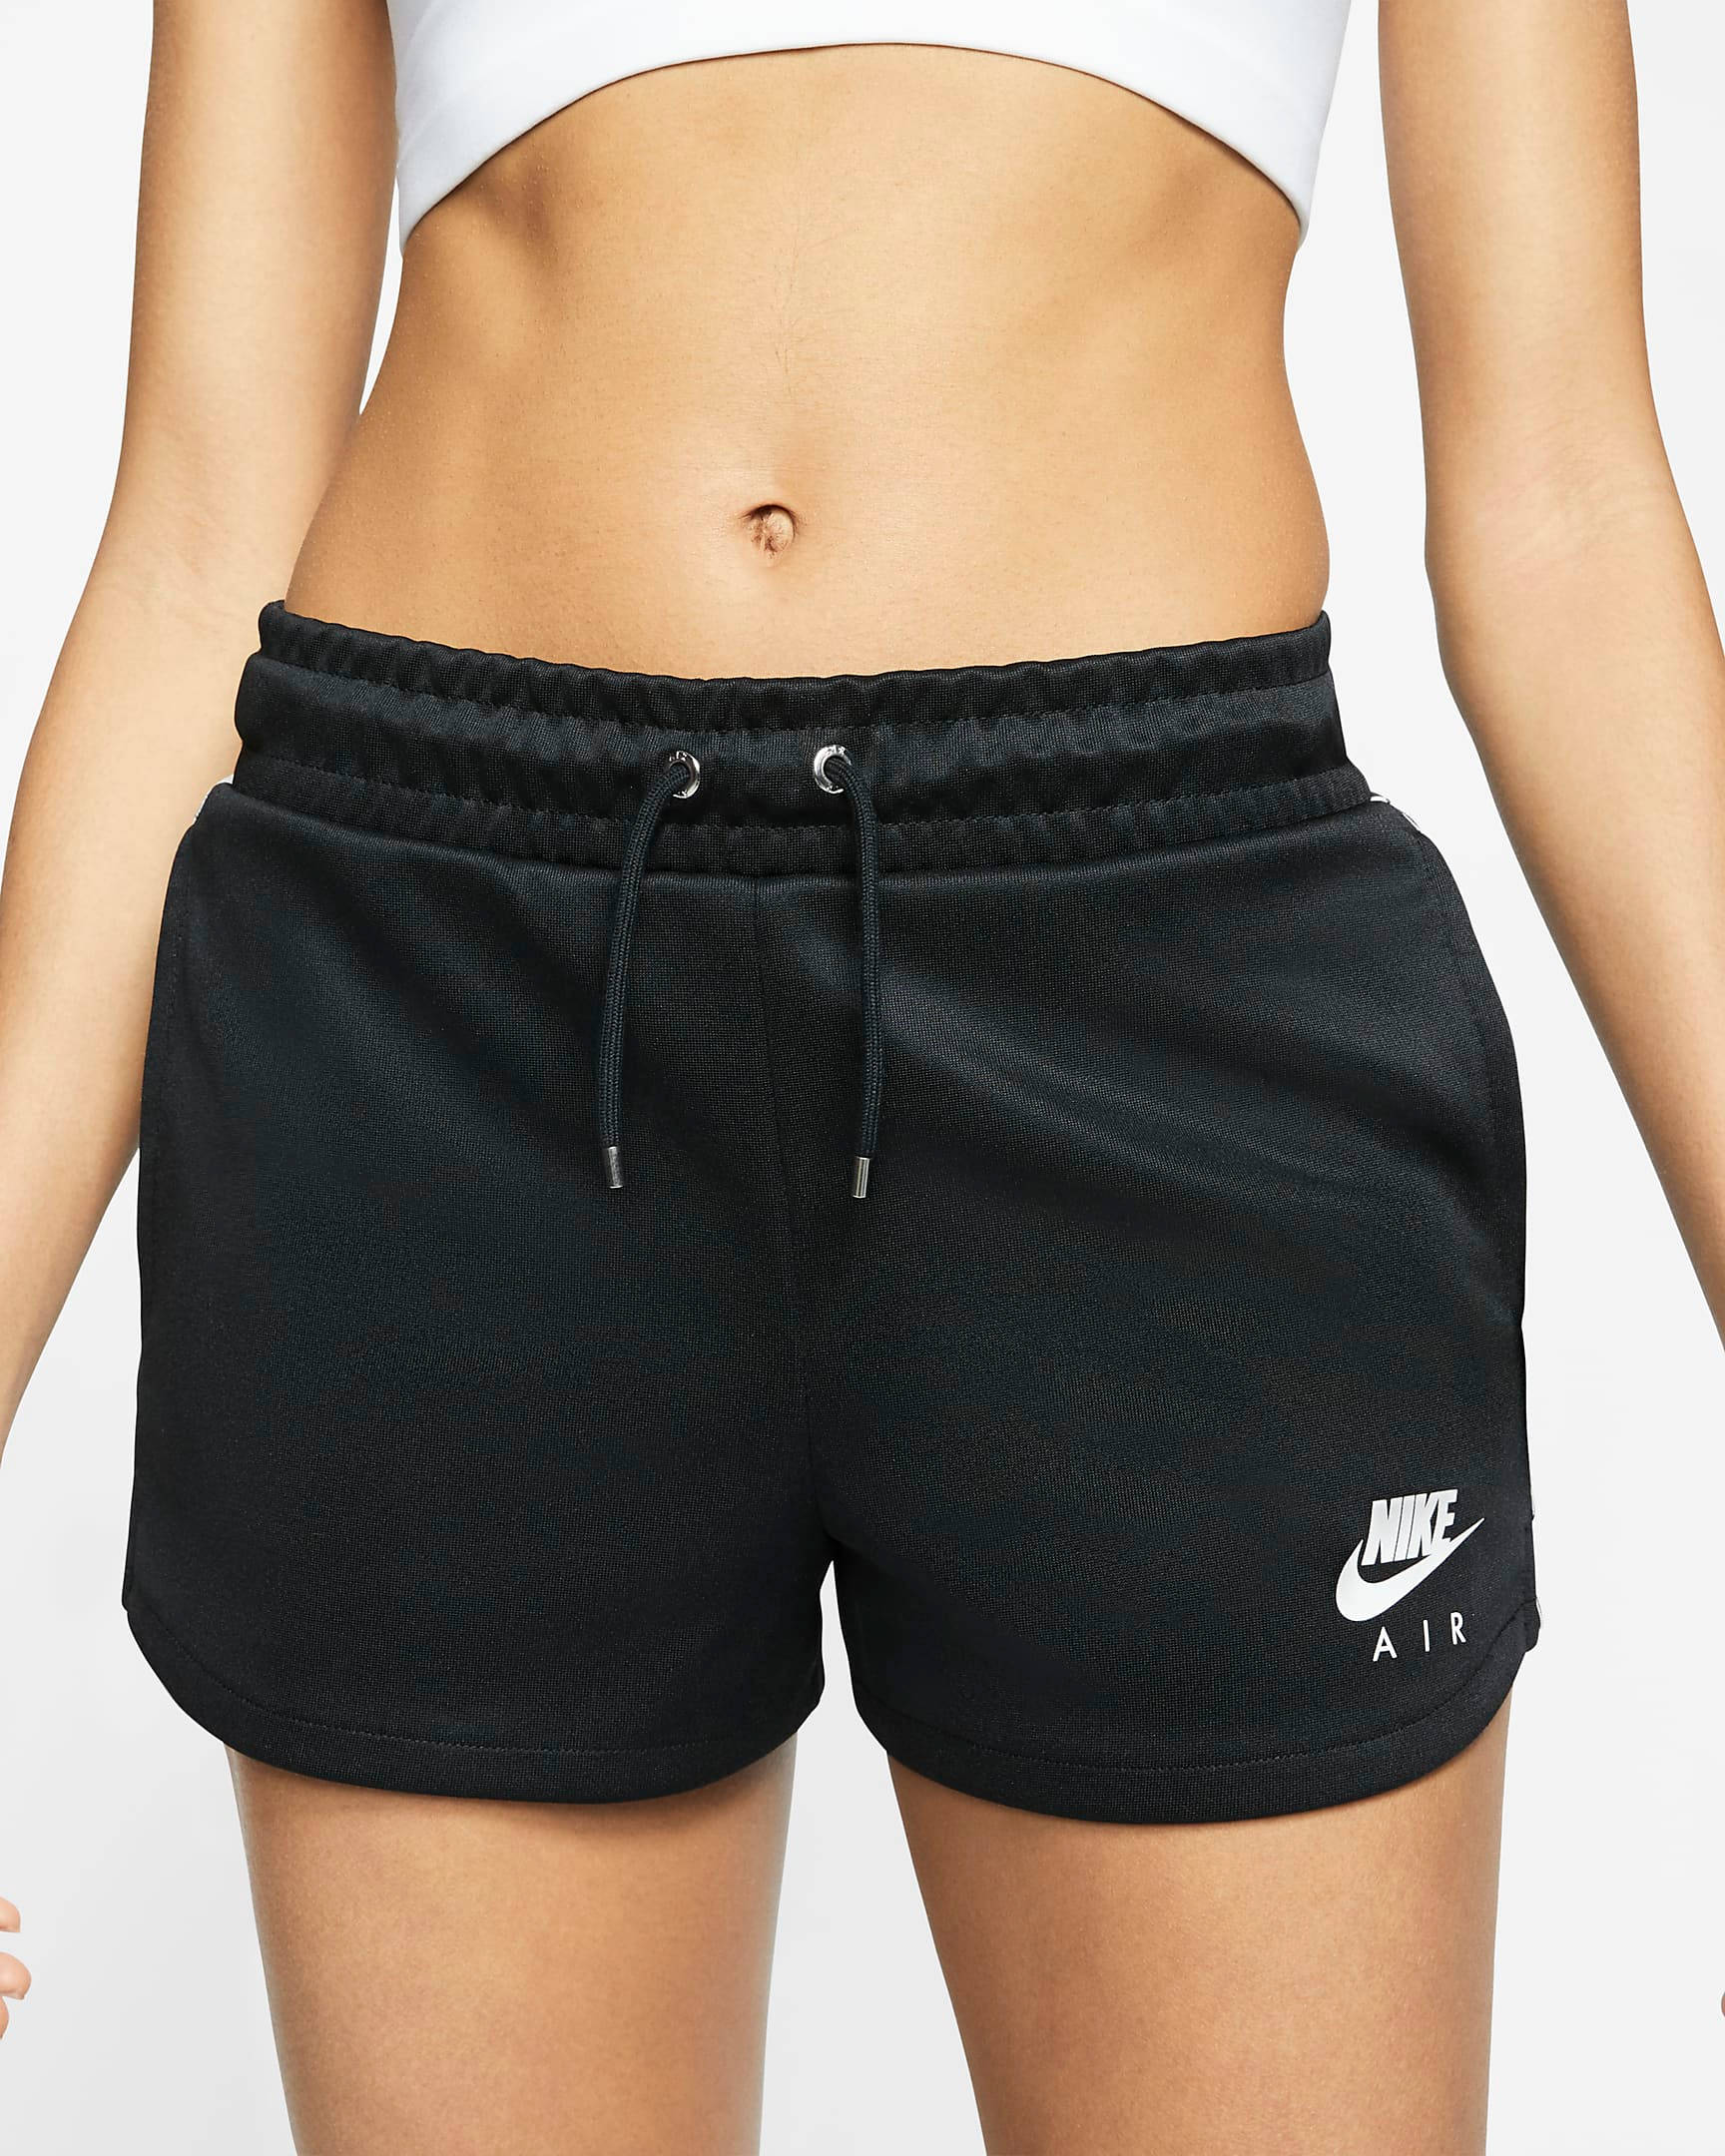 Nike Air Shorts - Black | The Sole Supplier